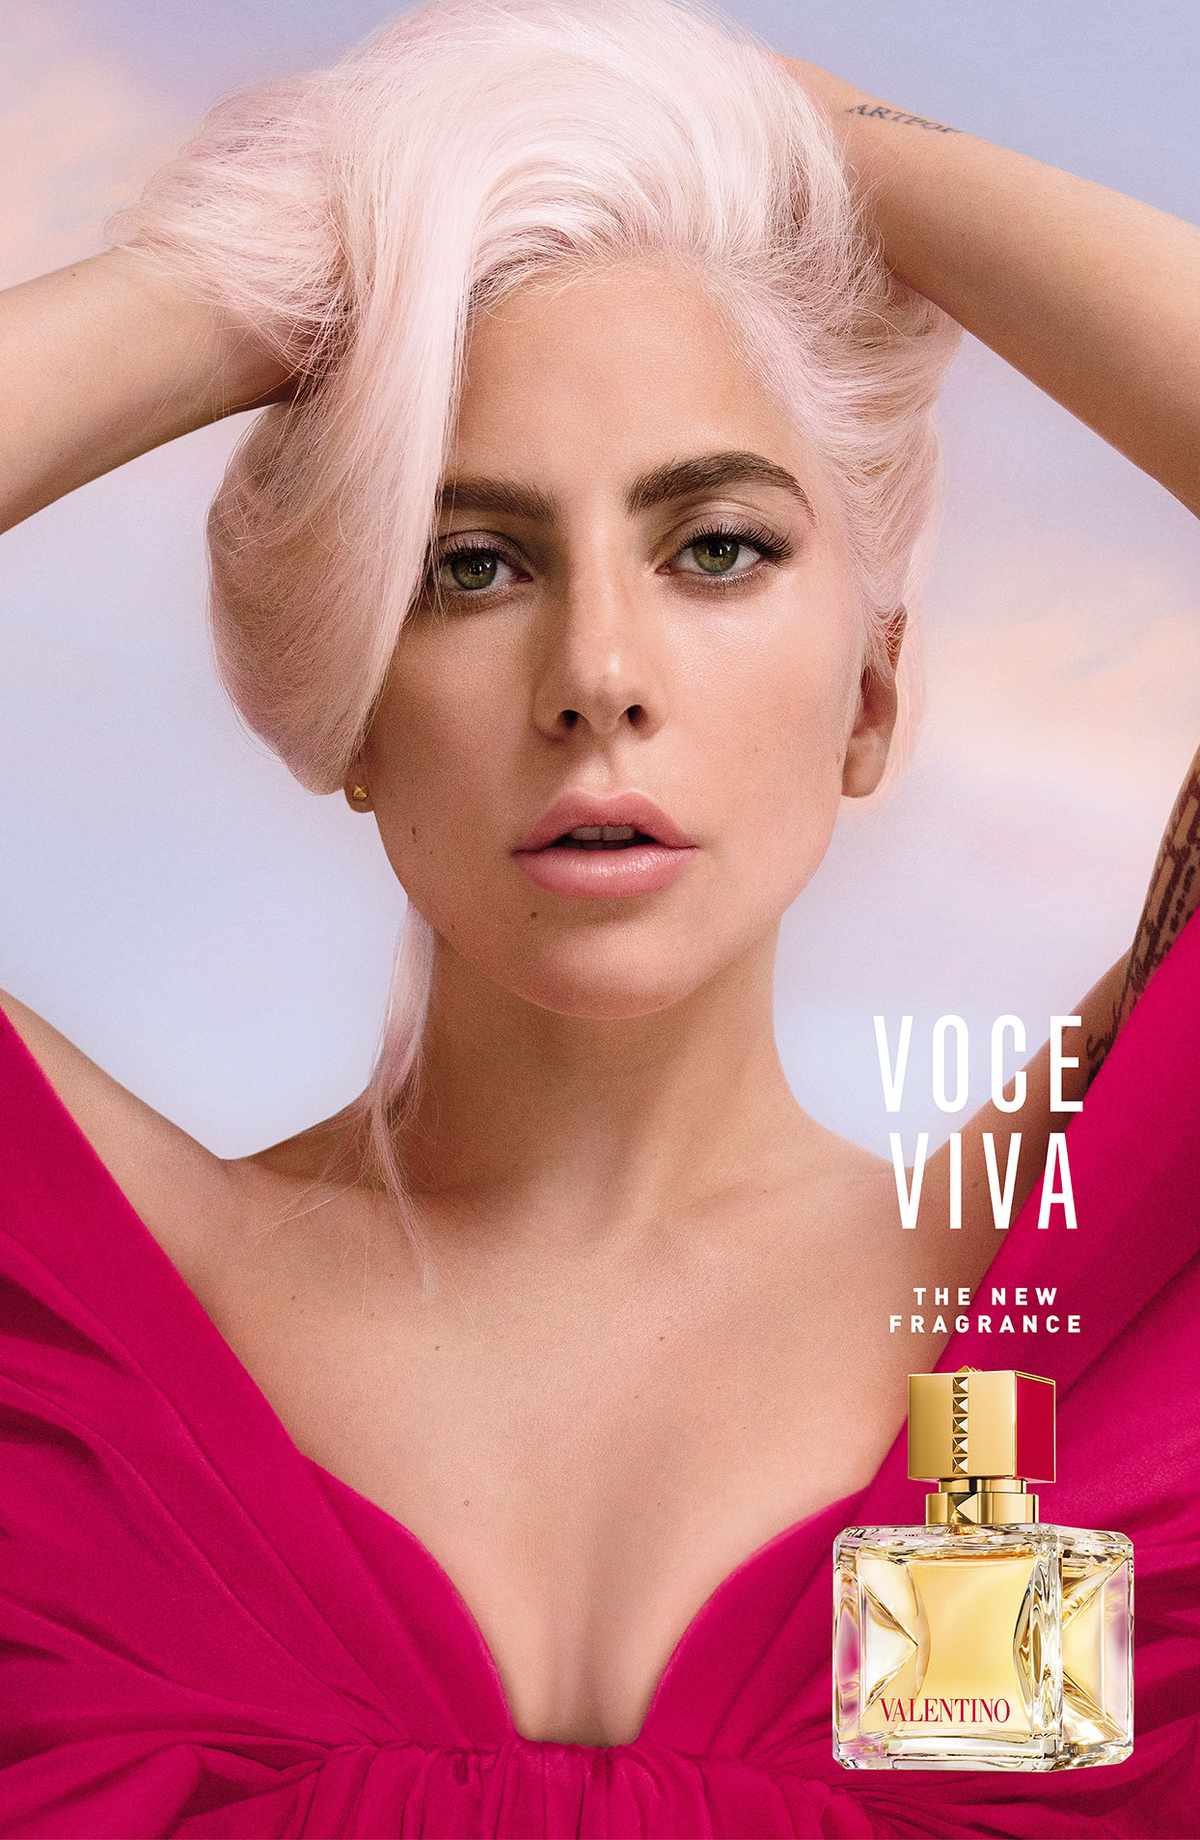 Lady Gaga Valentino Voce Viva Fragrance Campaign